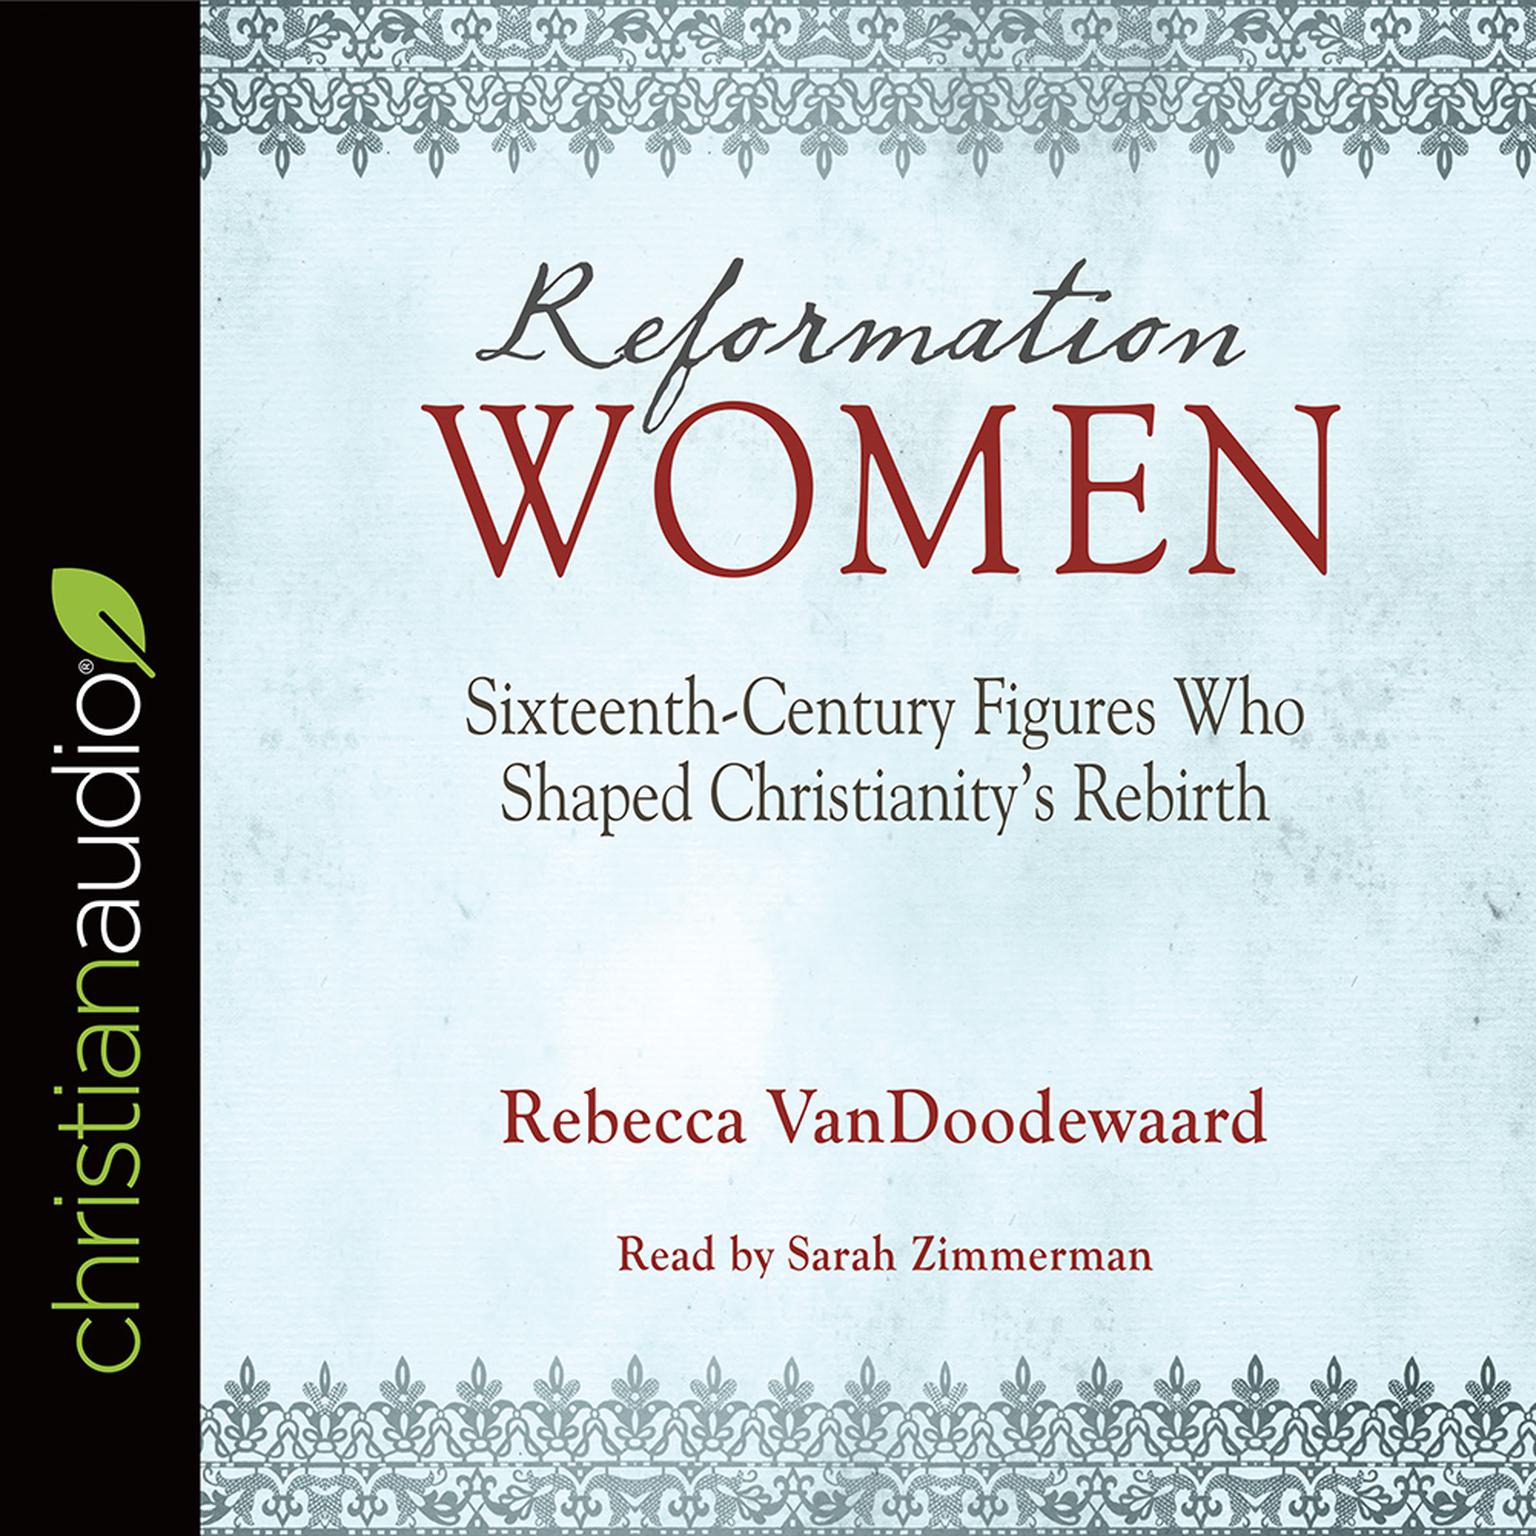 Reformation Women: Sixteenth-Century Figures Who Shaped Christianitys Rebirth Audiobook, by Rebecca VanDoodewaard